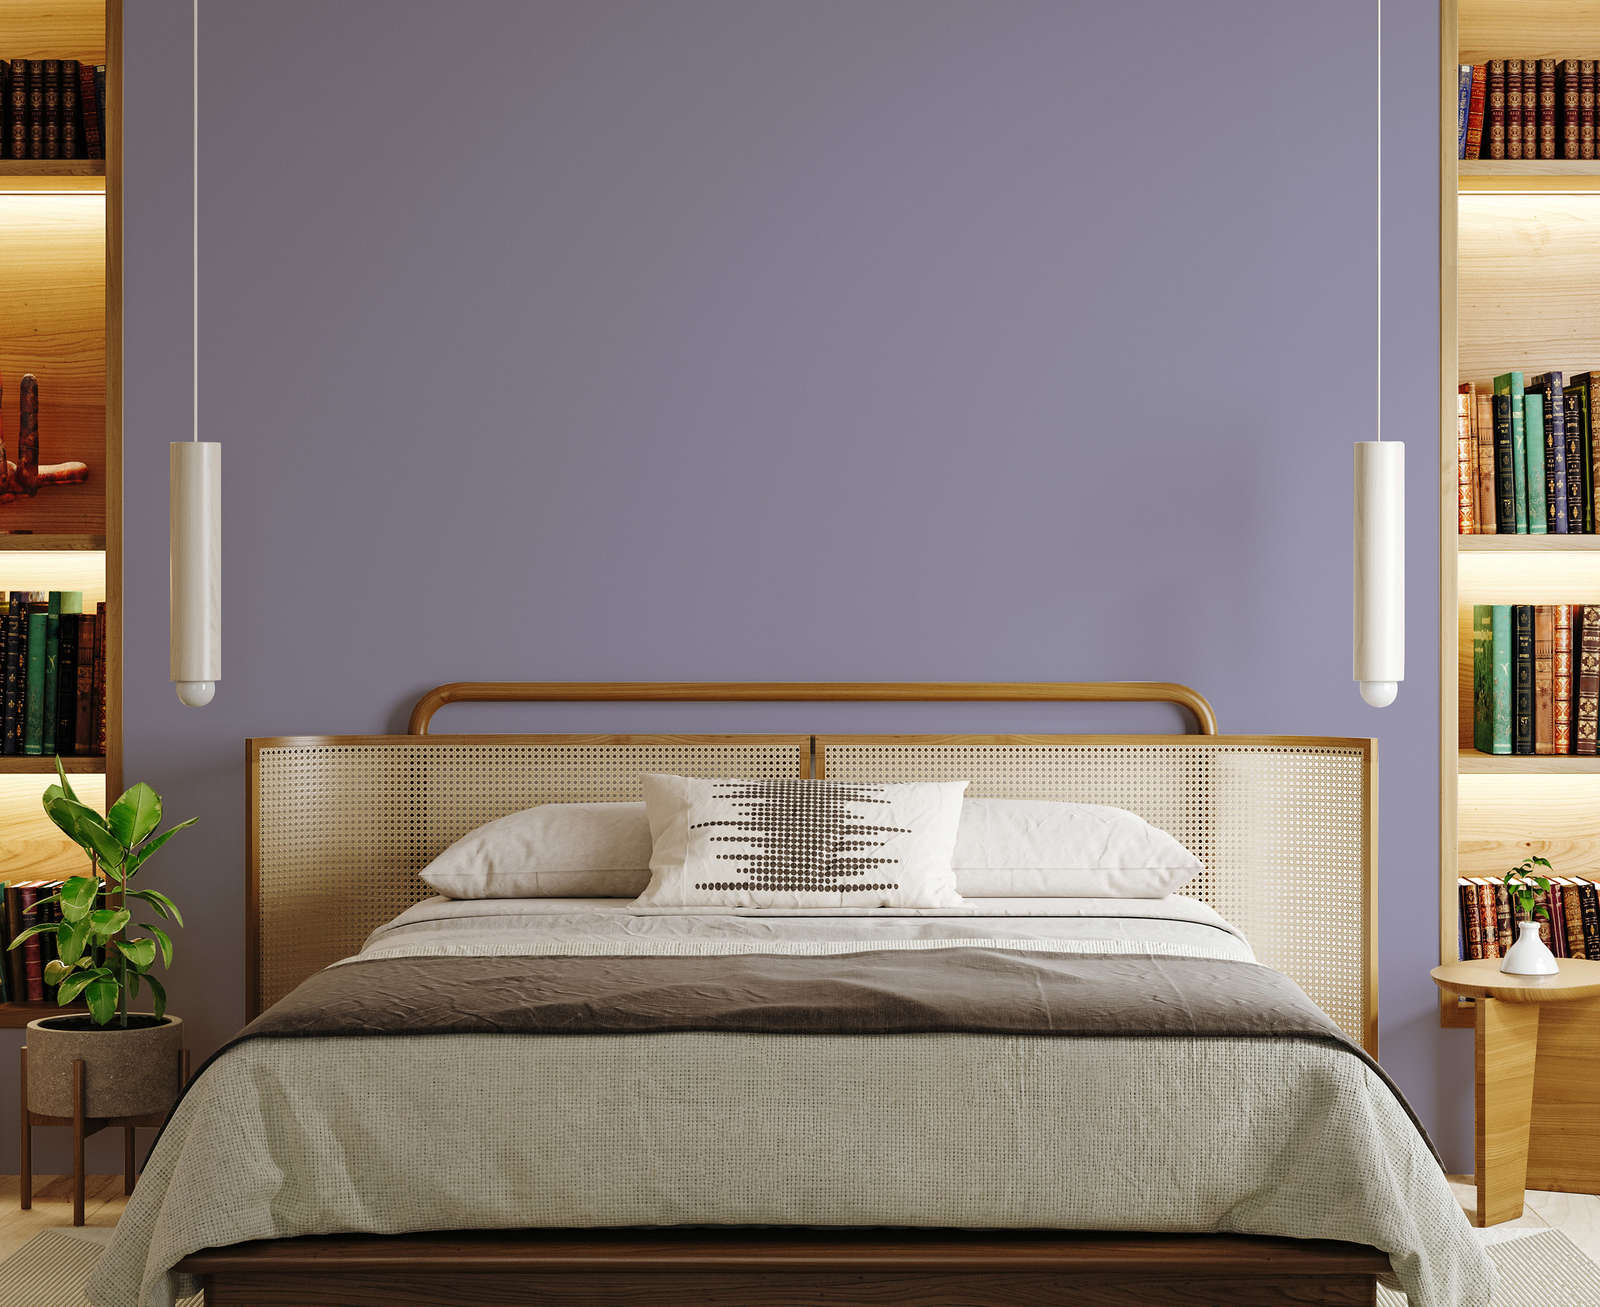             Premium Wall Paint sensitive lilac »Magical Mauve« NW204 – 5 litre
        